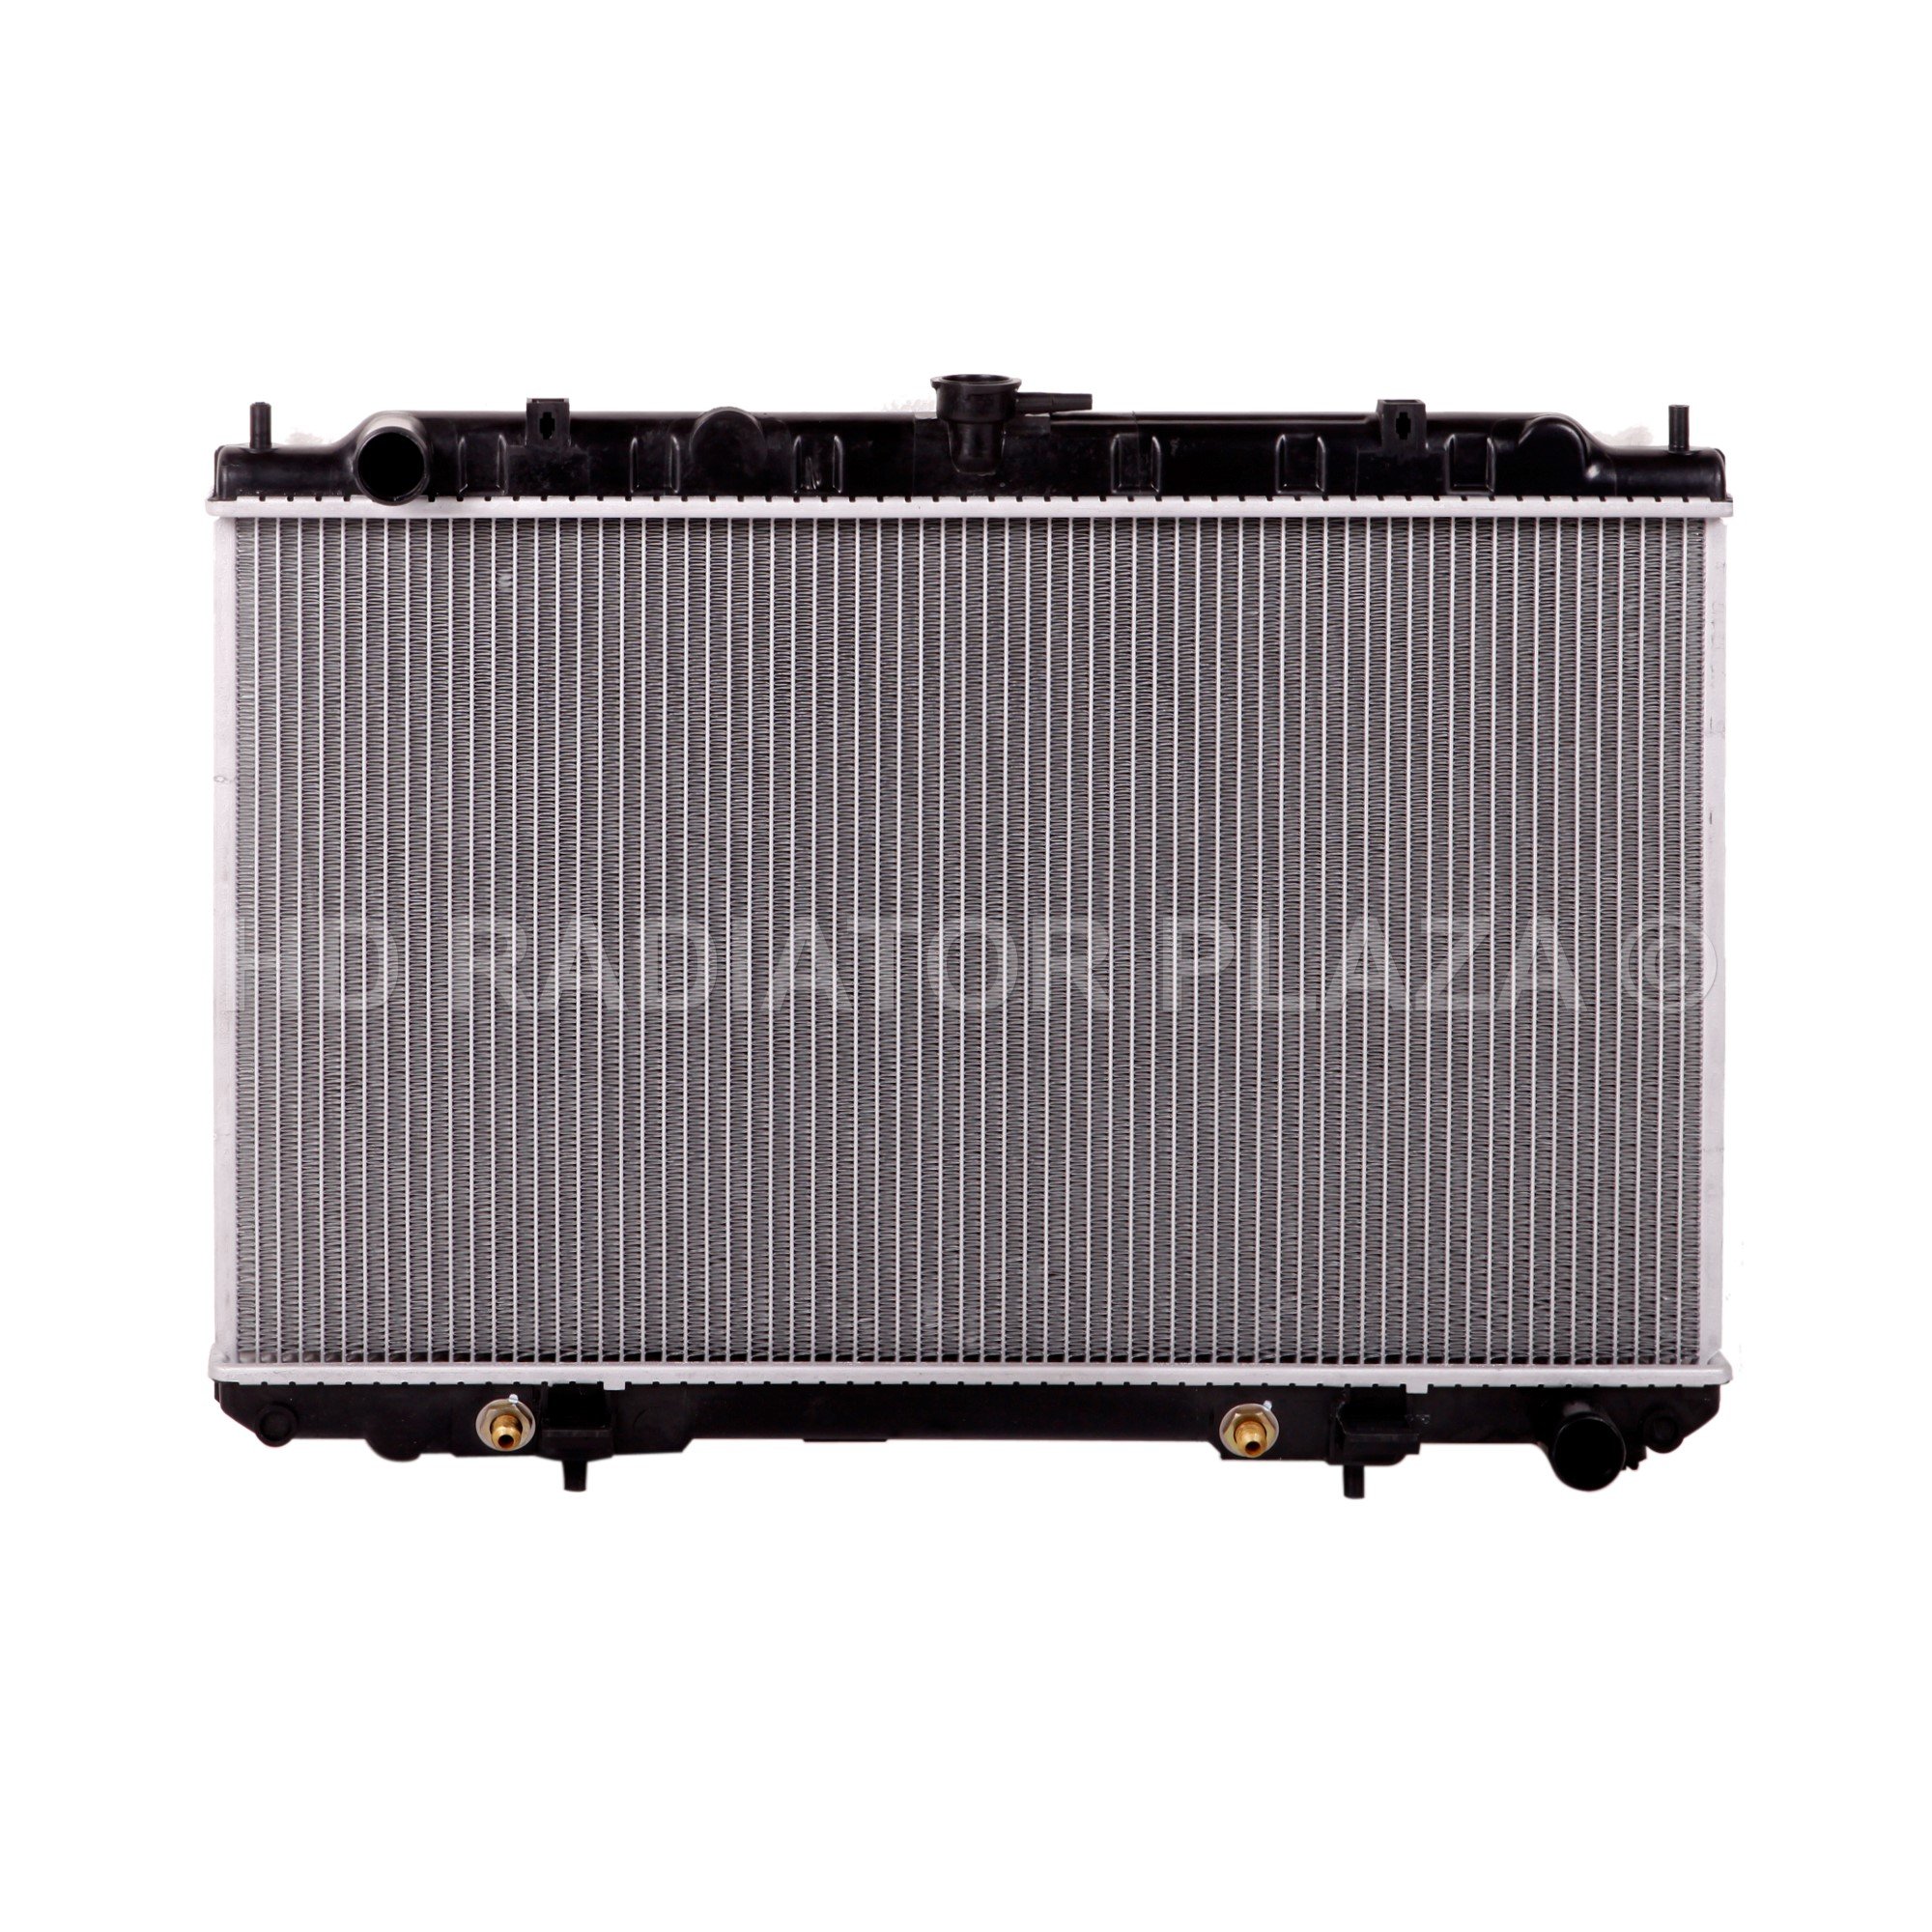 Radiator for 99-04 Nissan Maxima / Infiniti I35